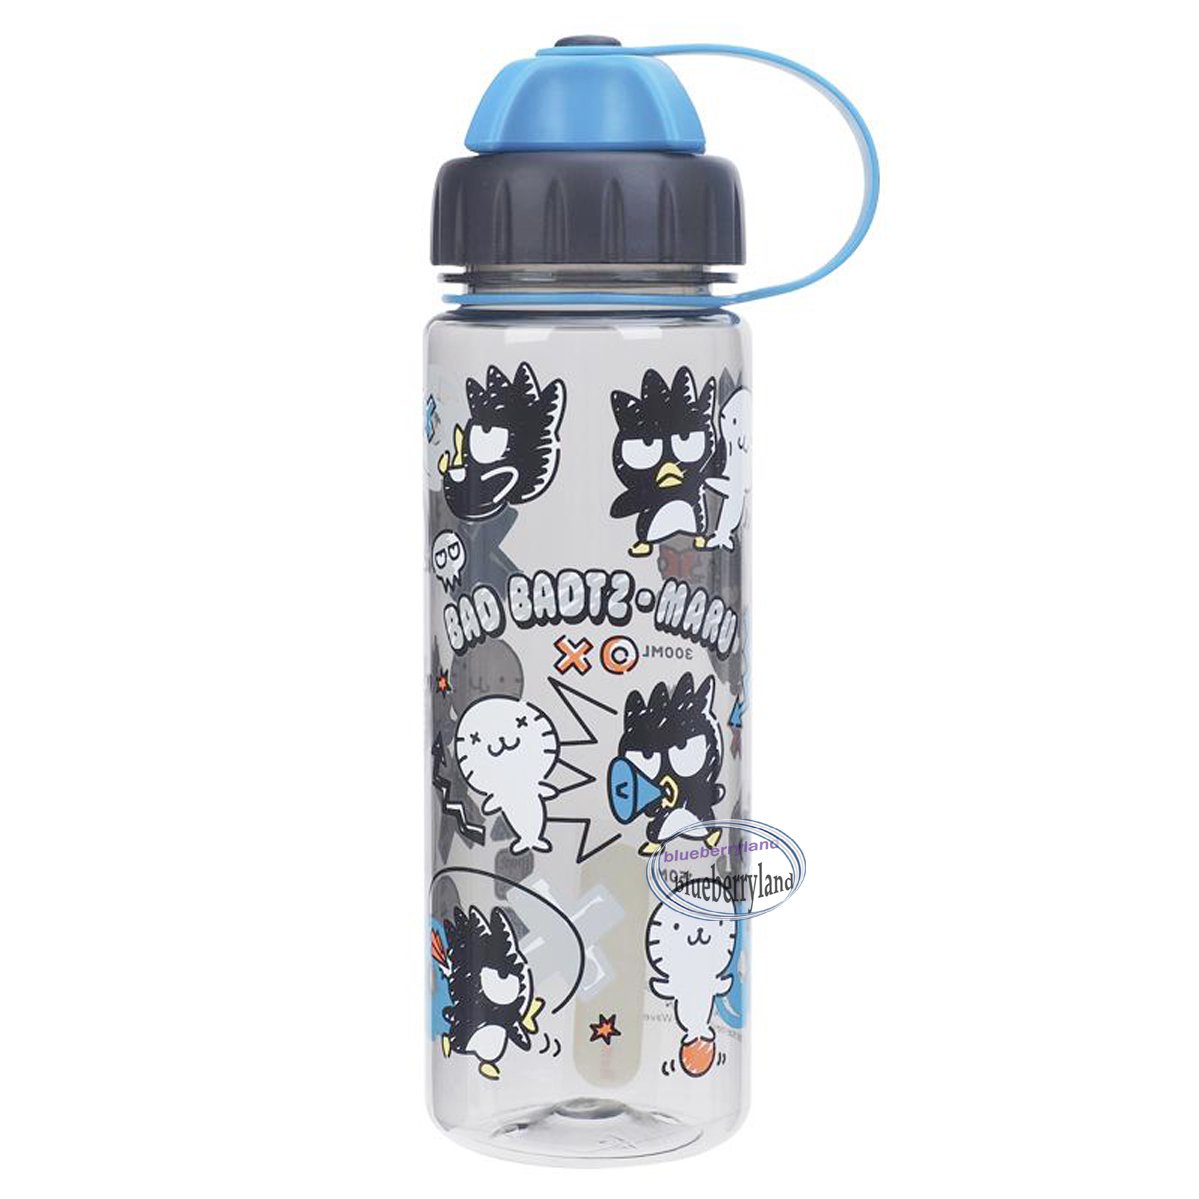 Sanrio Bad Badtz Maru XO BPA free Water Bottle Drinkware 450ml outdoor ...